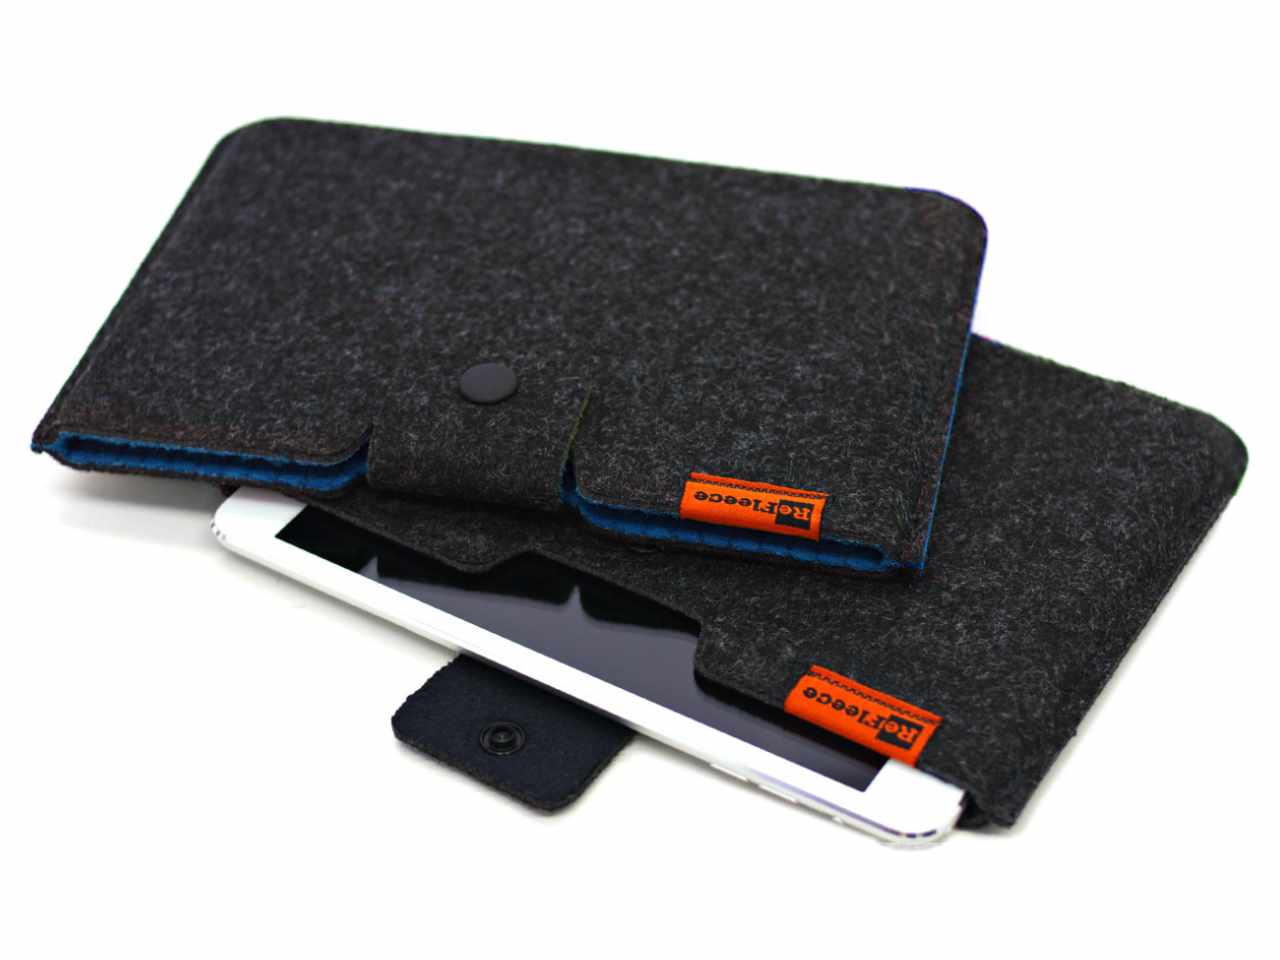 Refleece iPad Sleeve, made from recycled felt and upcycled fleece